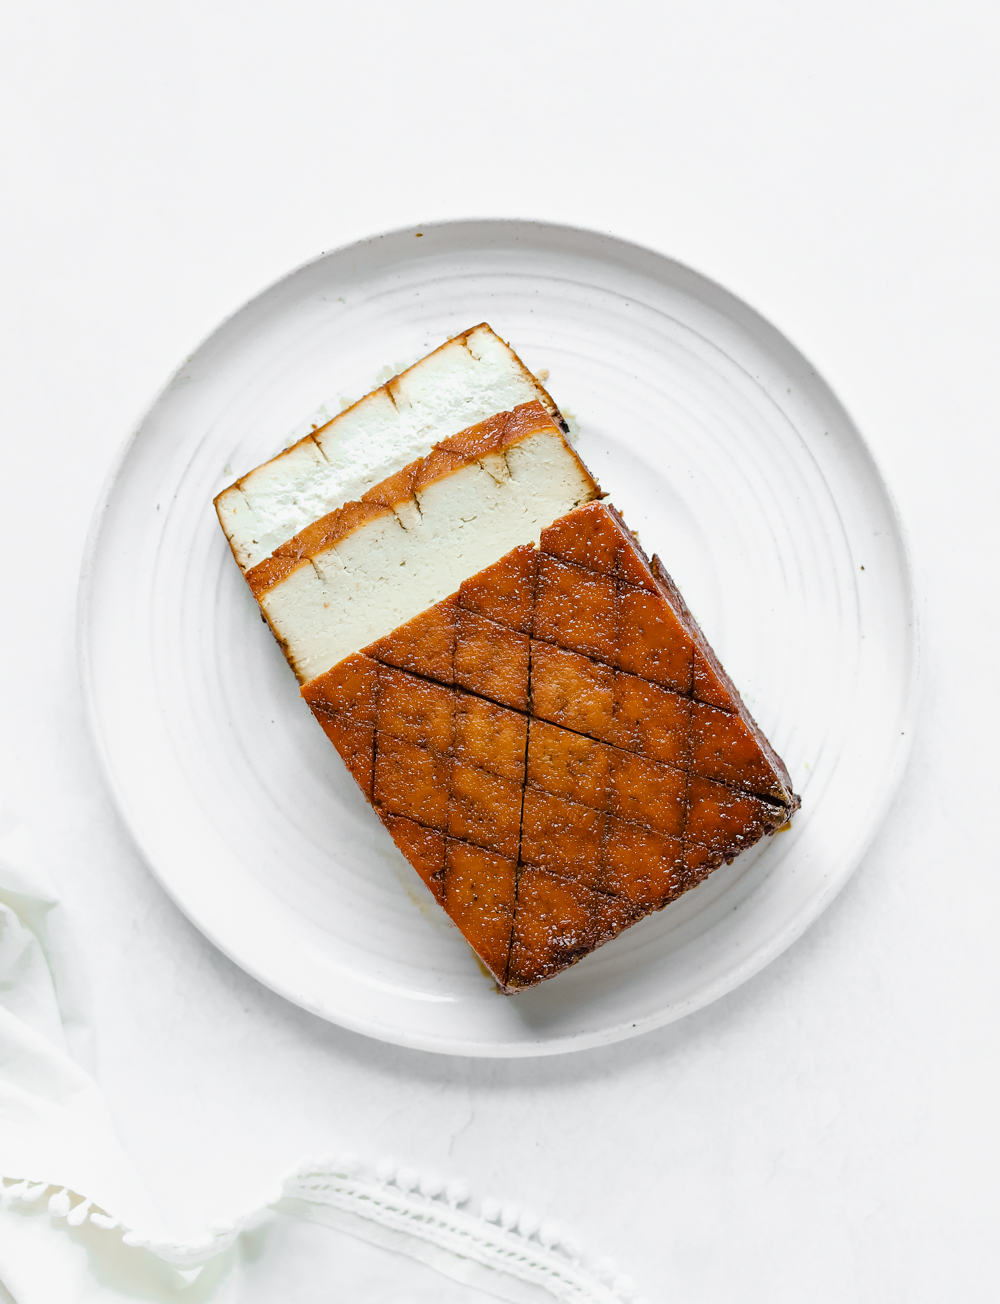 Sliced vegan orange glazed baked tofu on a white plate.